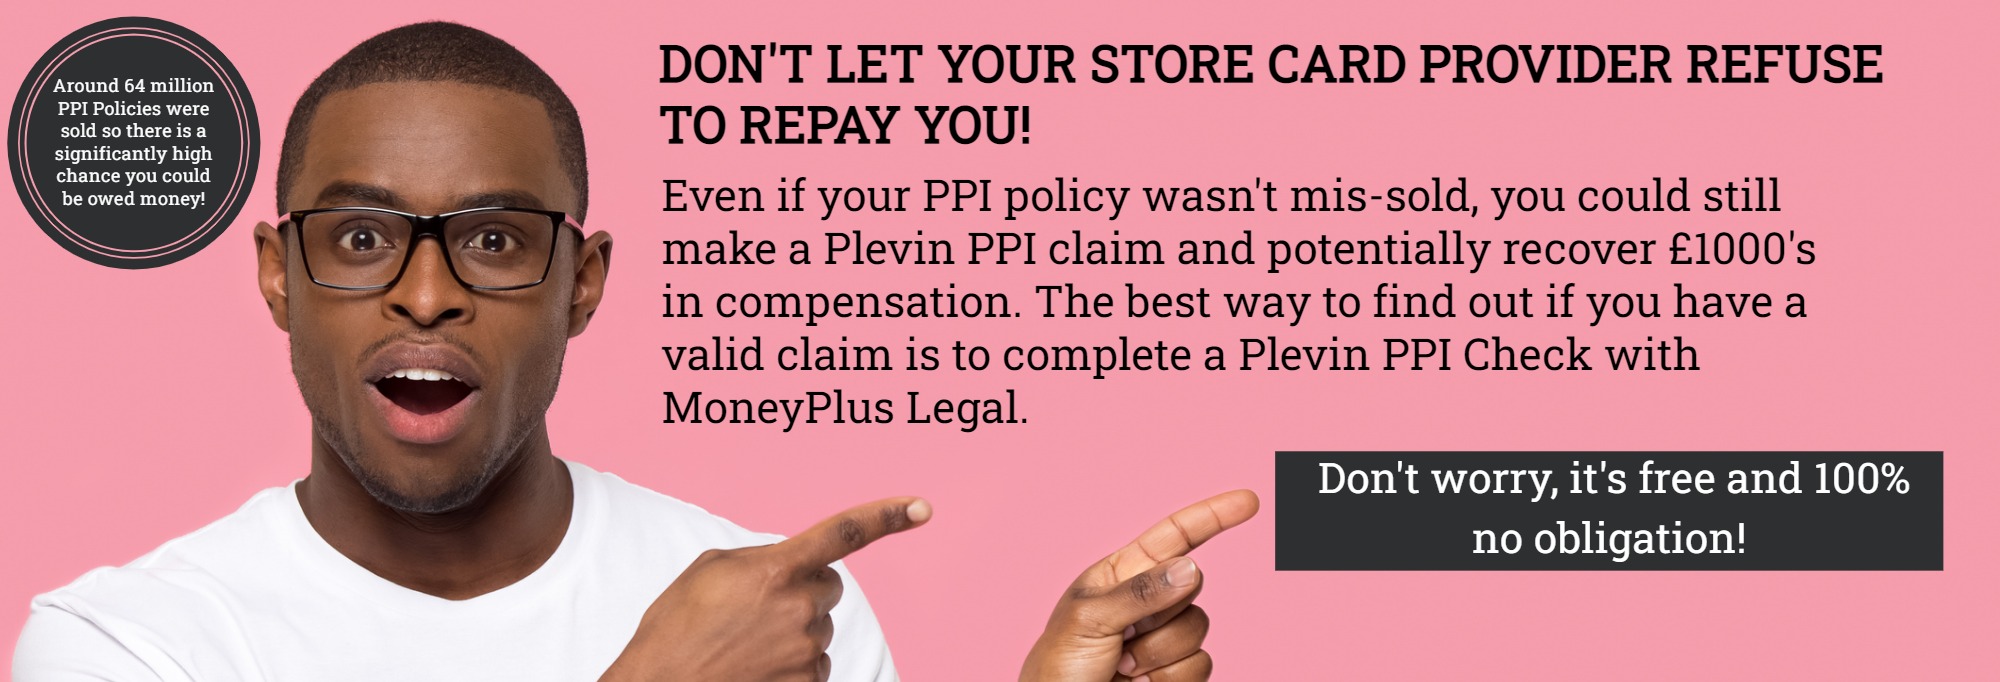 Topman Store card Plevin PPI Commission Claim